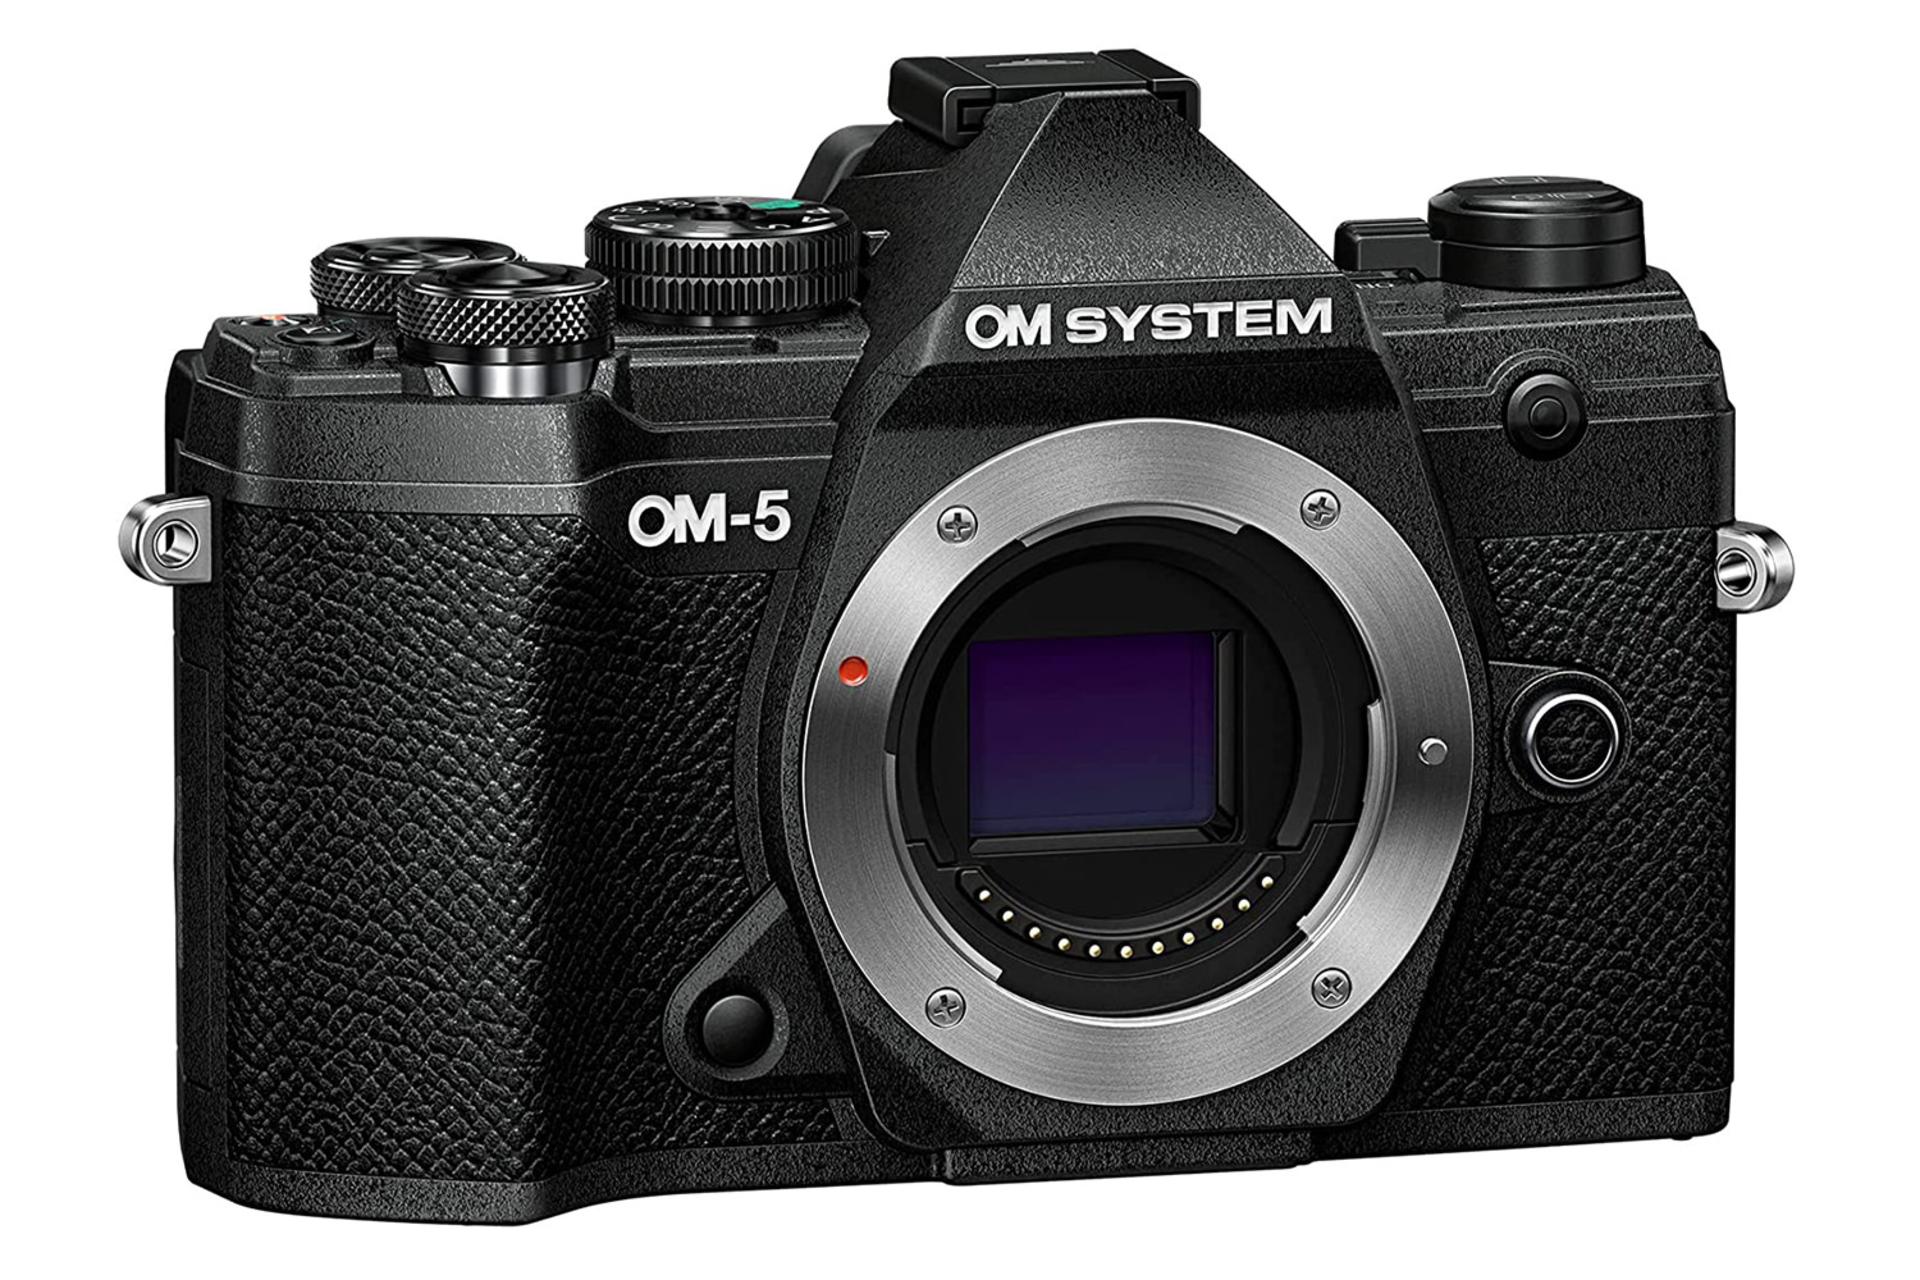 دوربین او ام سیستم OM System OM-5